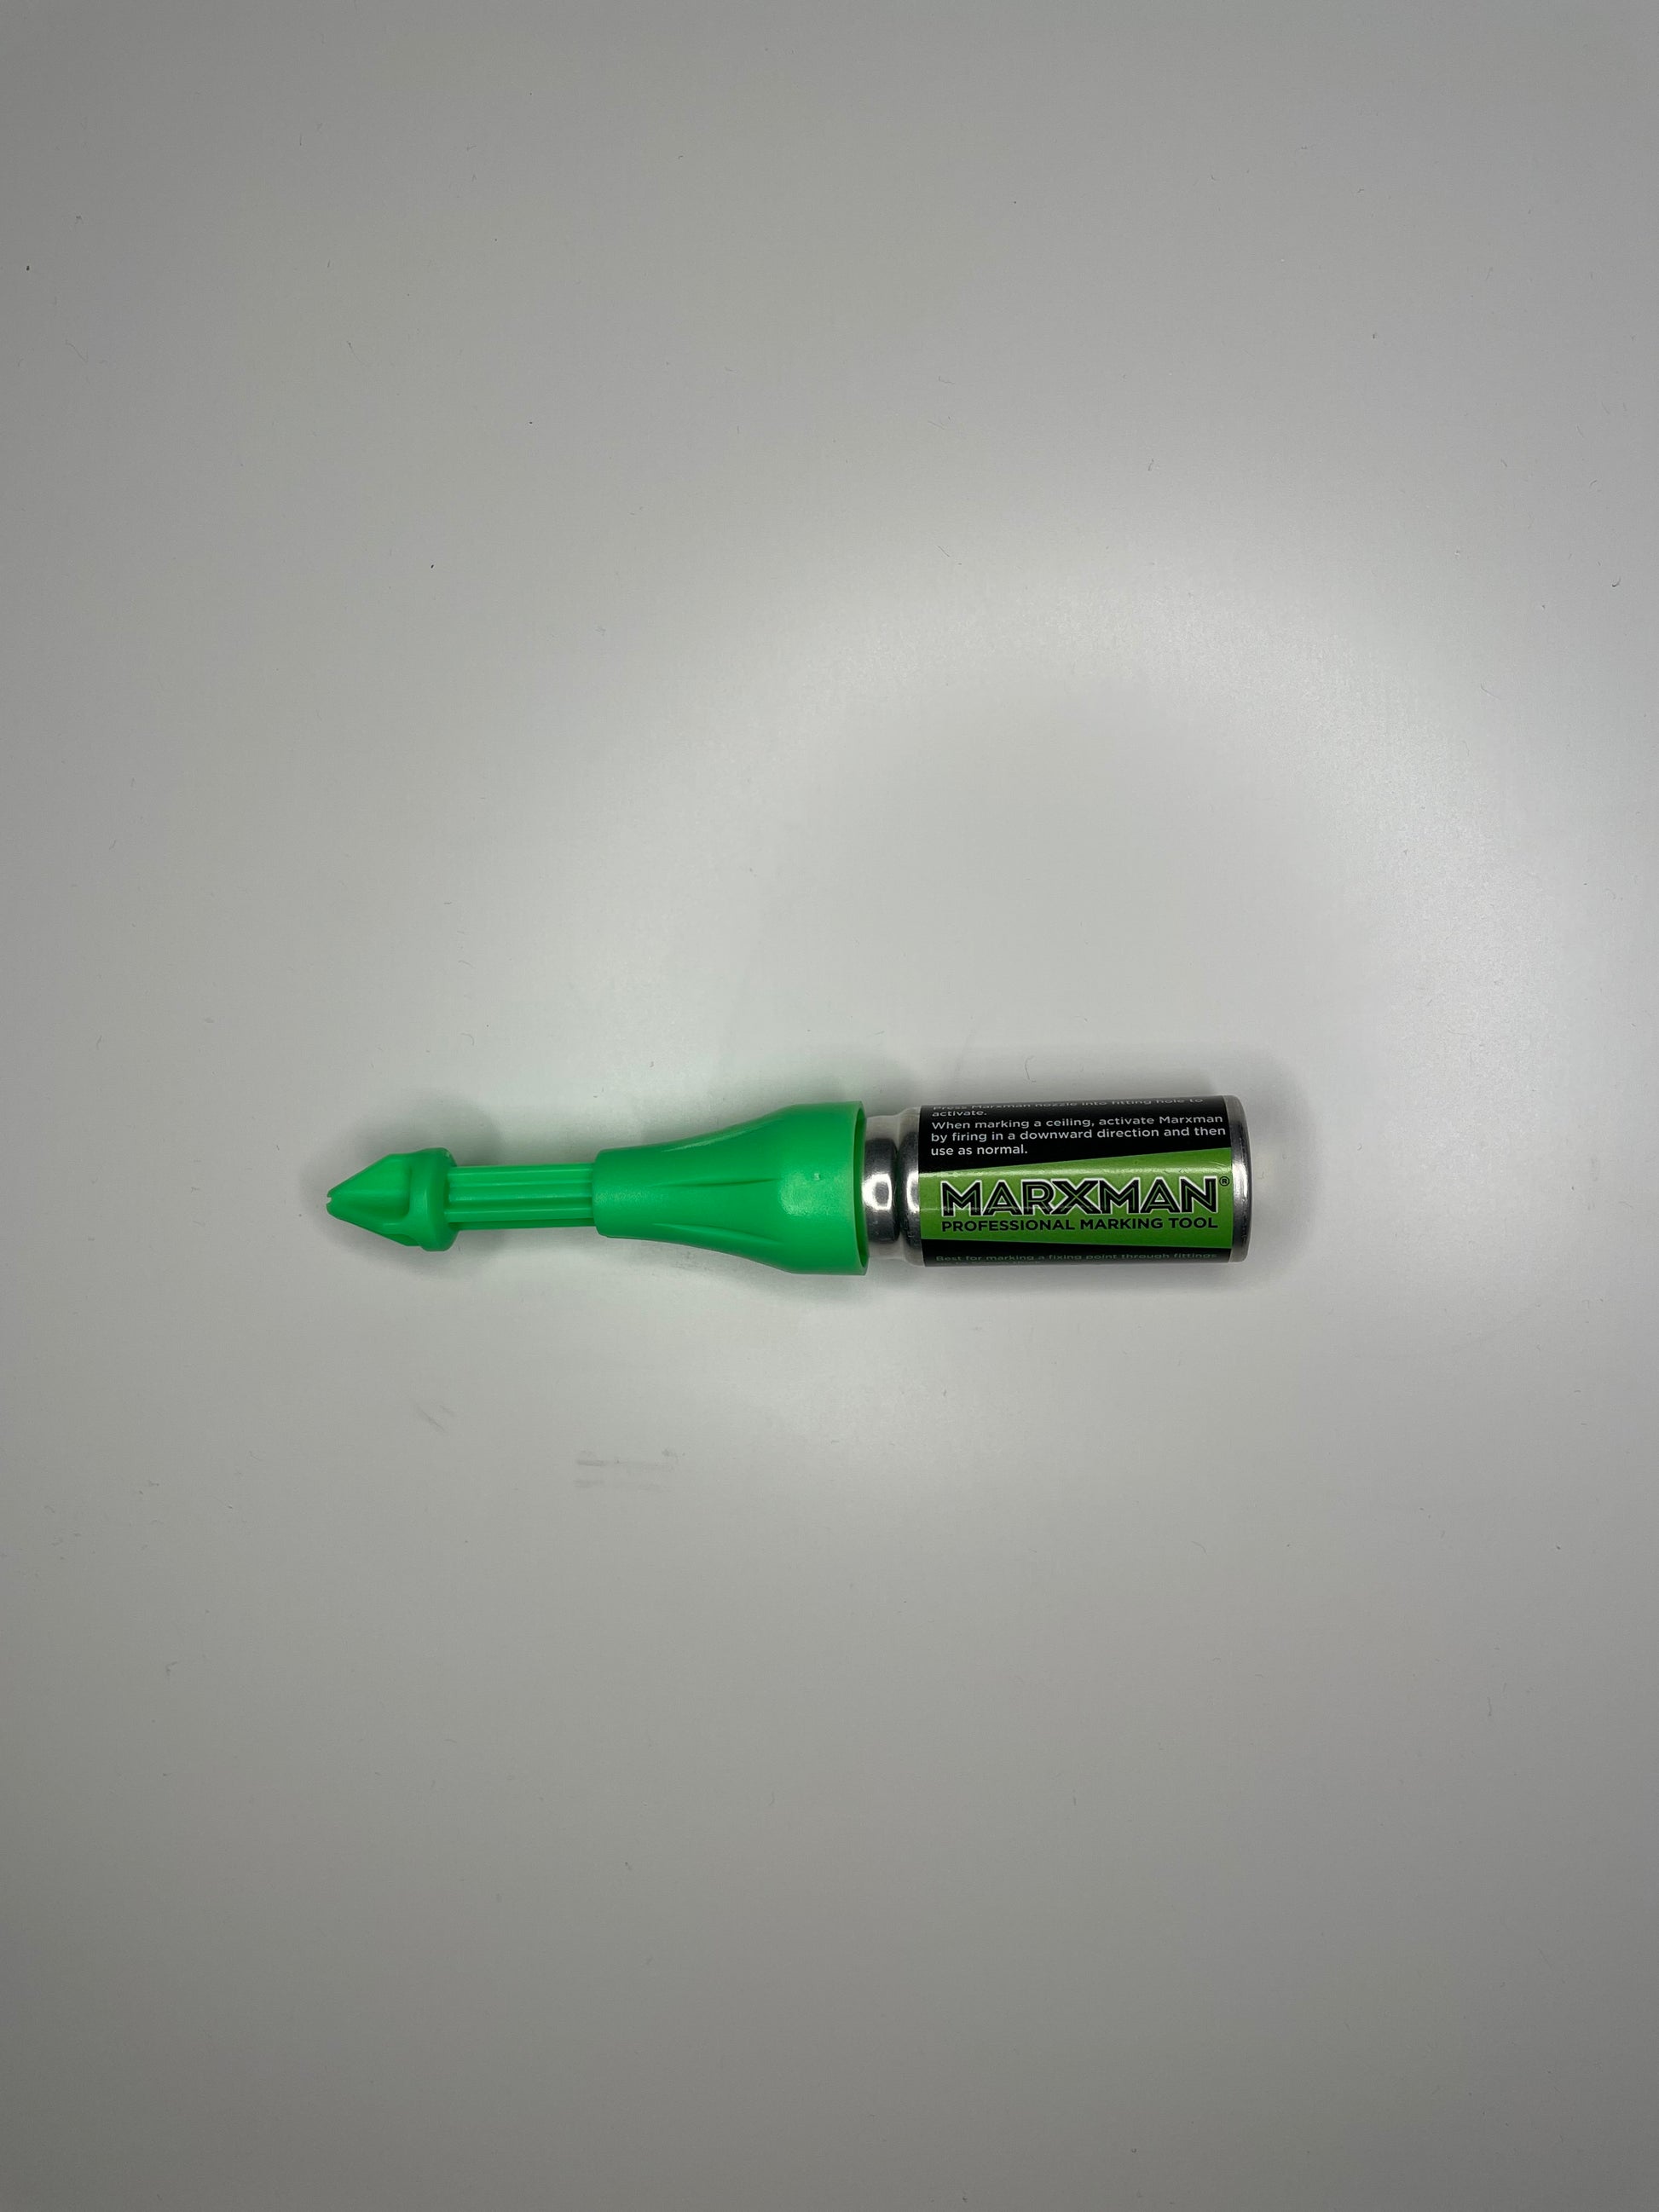 Marxman Chalk Non- Permanent DIY Marking Tool Pen